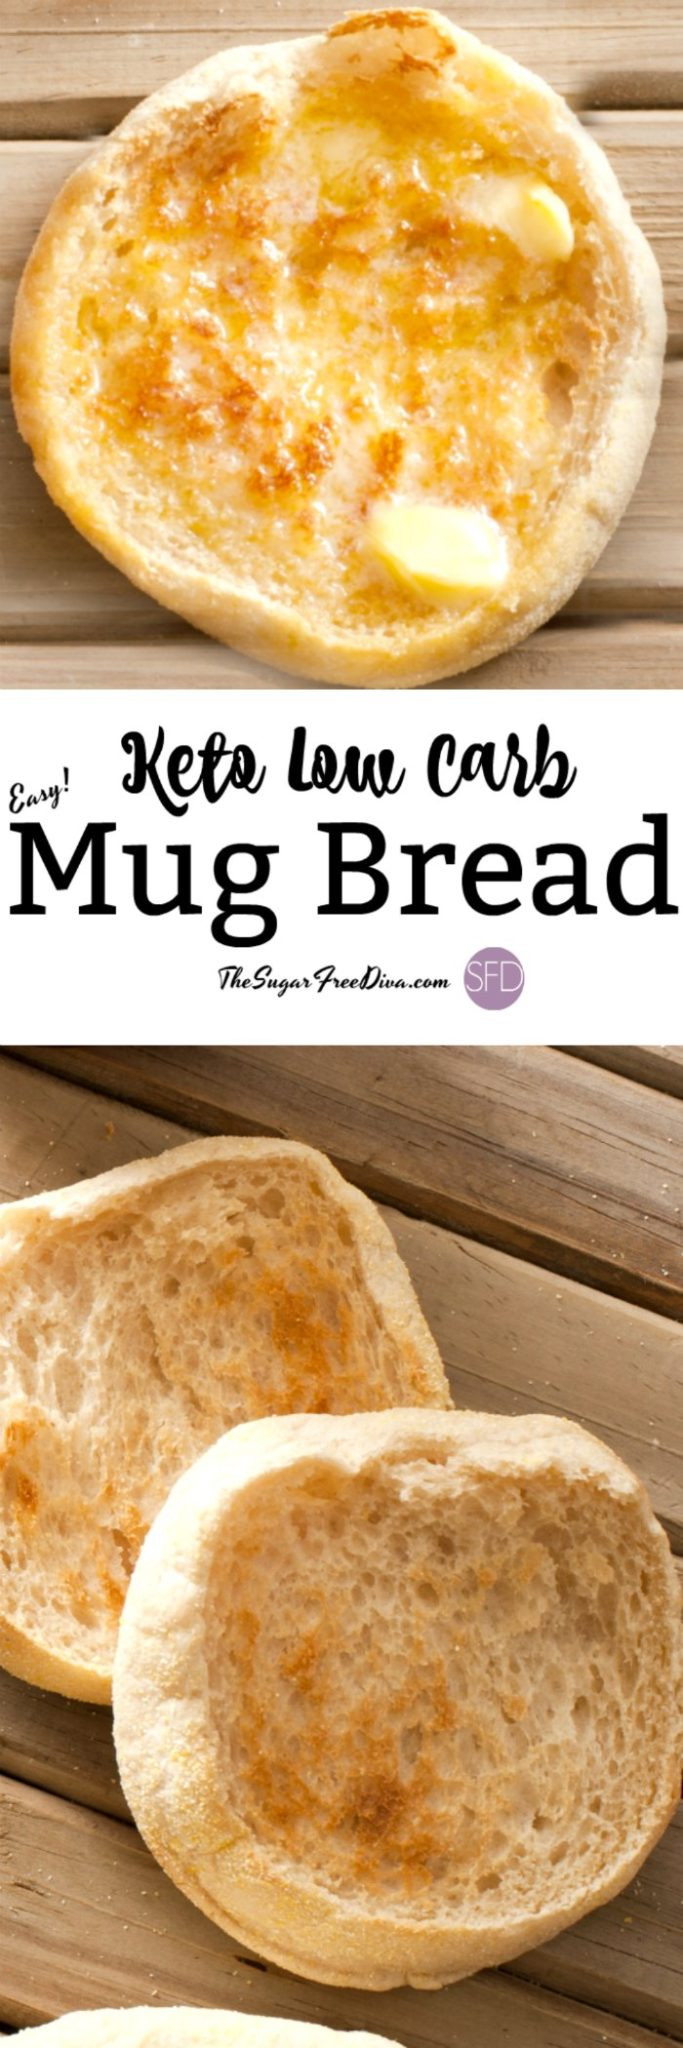 Low Carb Bread Recipes Keto
 Easy and Yummy Keto Low Carb Mug Bread Recipe